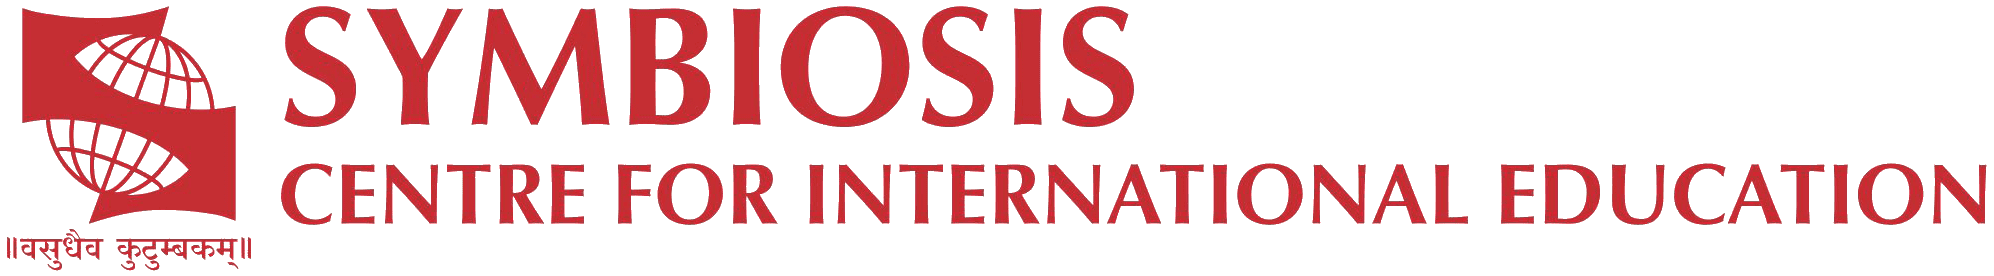 	Symbiosis International University | Top International University in India